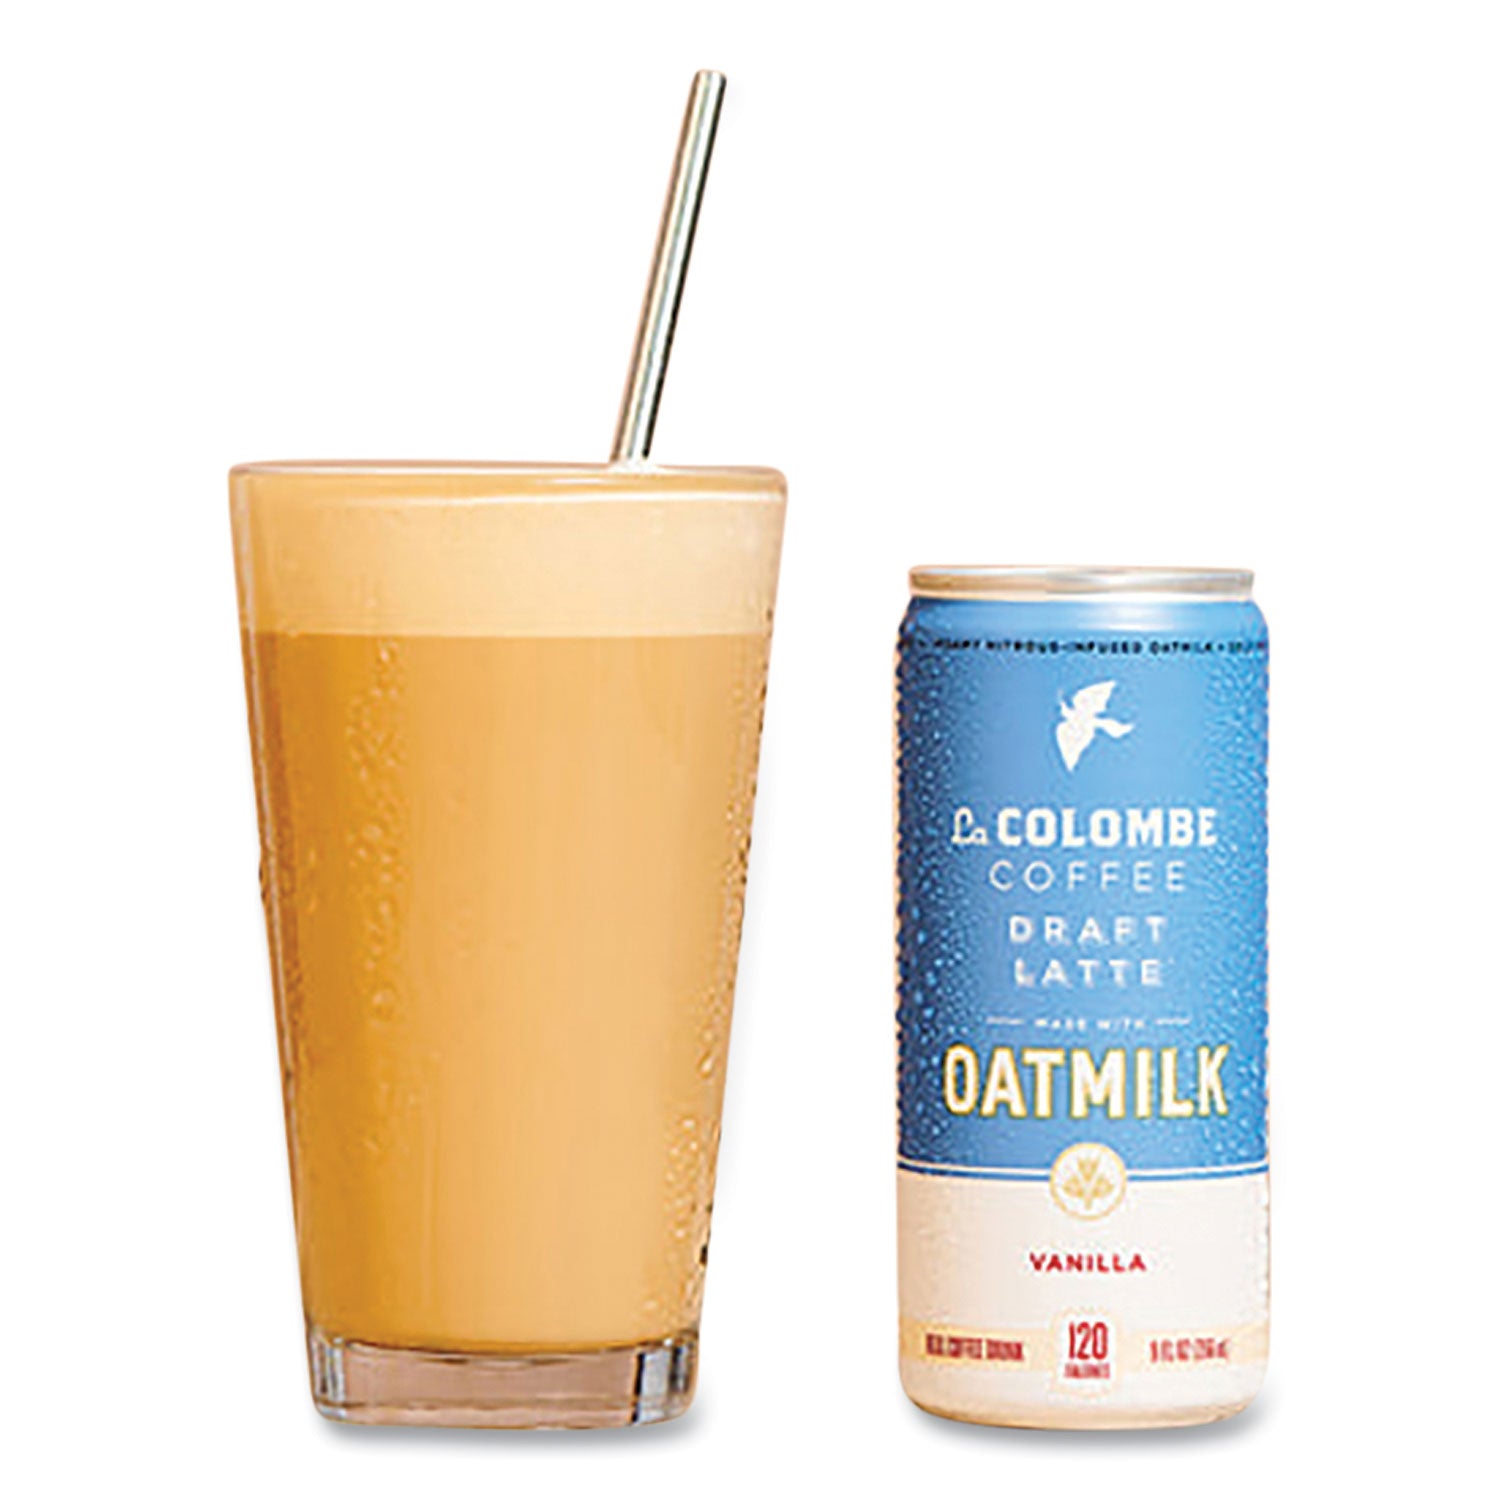 cold-brew-draft-latte-vanilla-9-oz-can-12-carton_lal02584 - 2